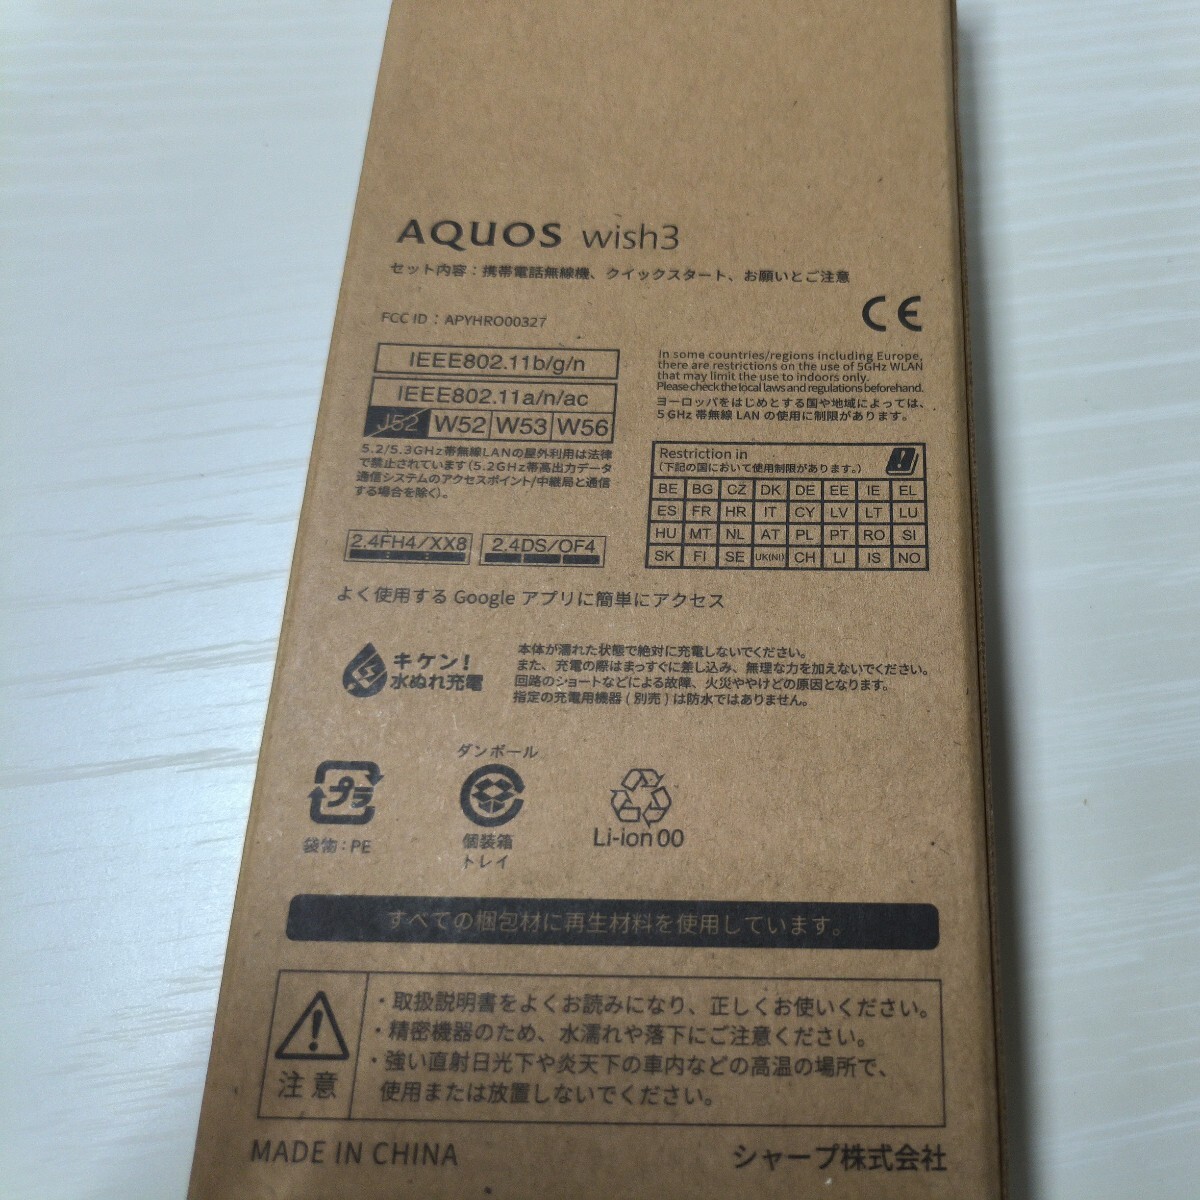 AQUOS SIMフリー A302SH ソフトバンク SIMフリー A302SH AQUOS wish3 ブラック [Black] Softbank 白ロム スマートフォンの画像4